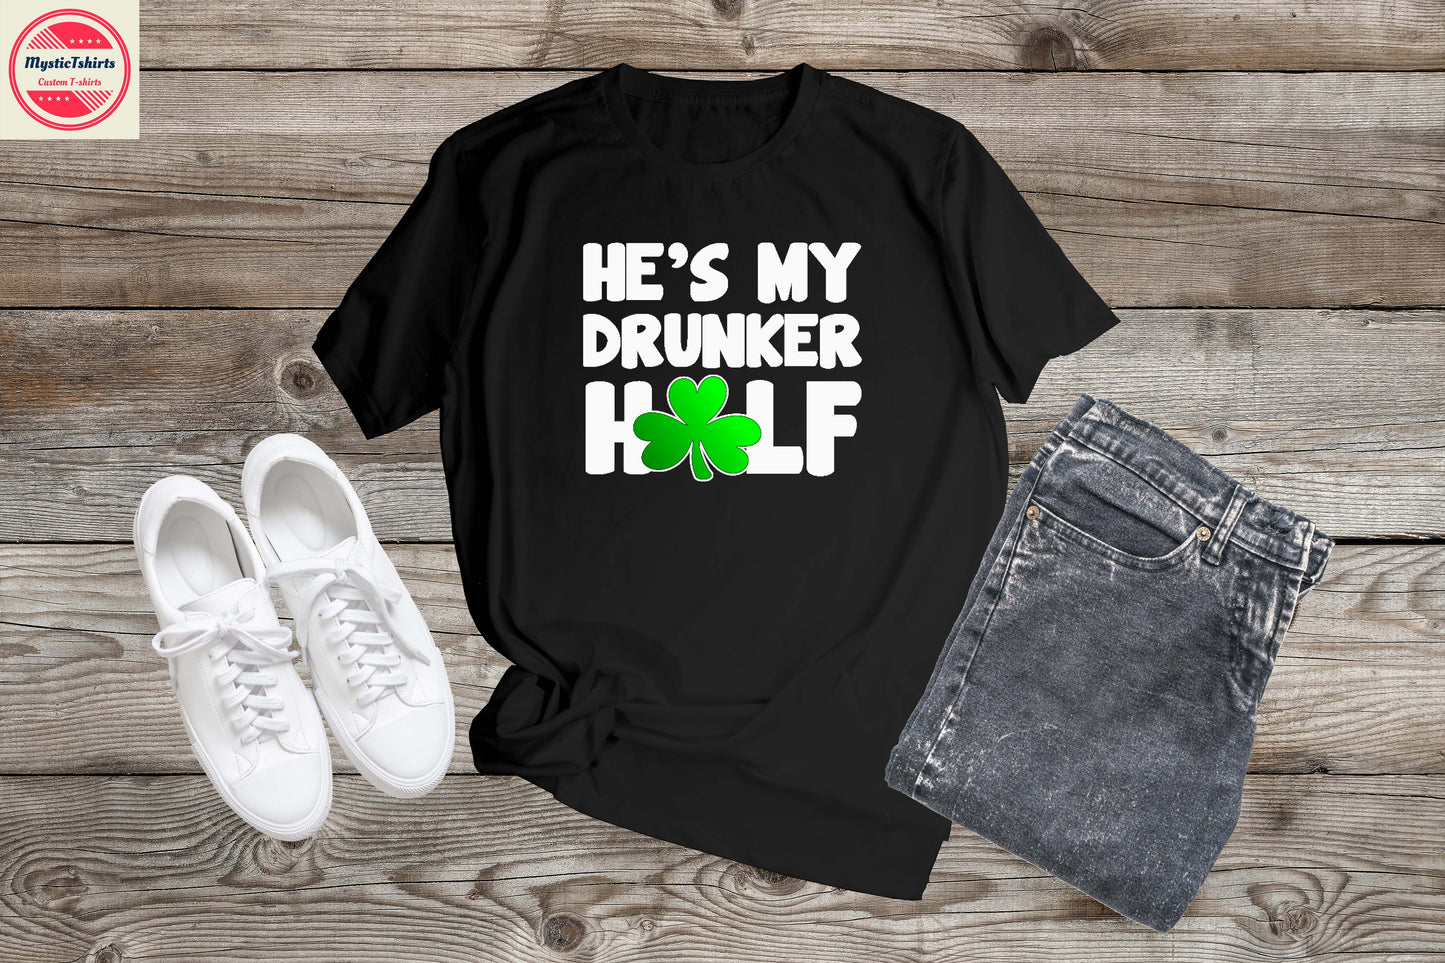 194. HE'S MY DRUNKER HALF, Custom Made Shirt, Personalized T-Shirt, Custom Text, Make Your Own Shirt, Custom Tee